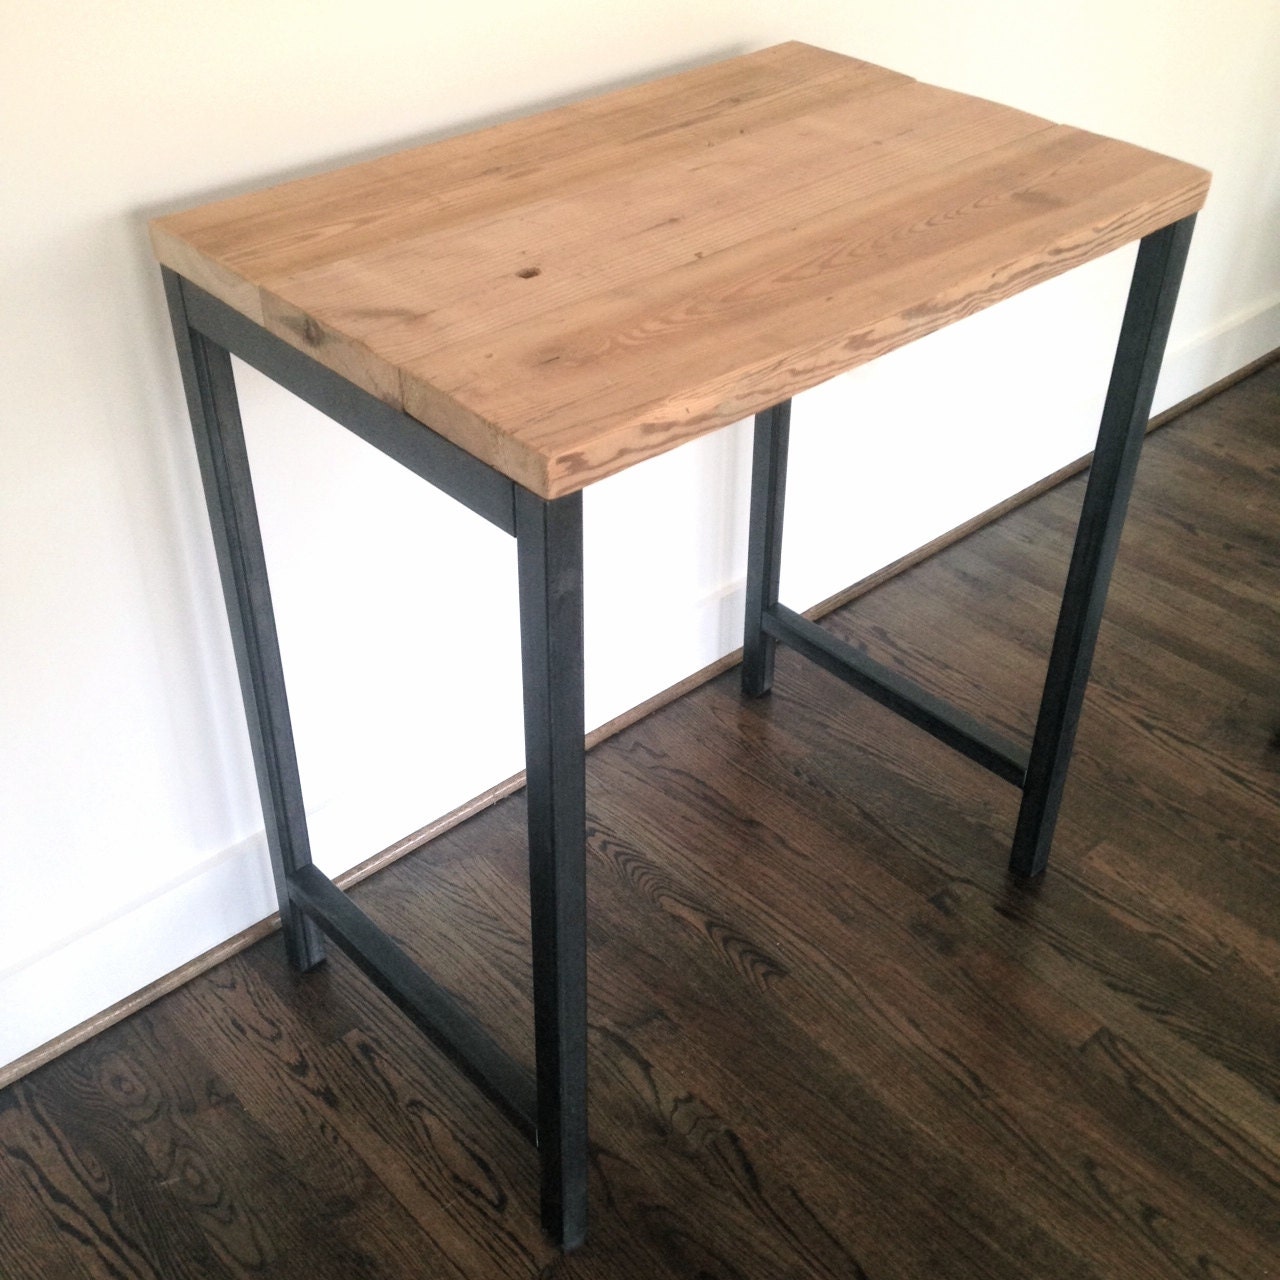 The Monterey Reclaimed Wood Standing Desk